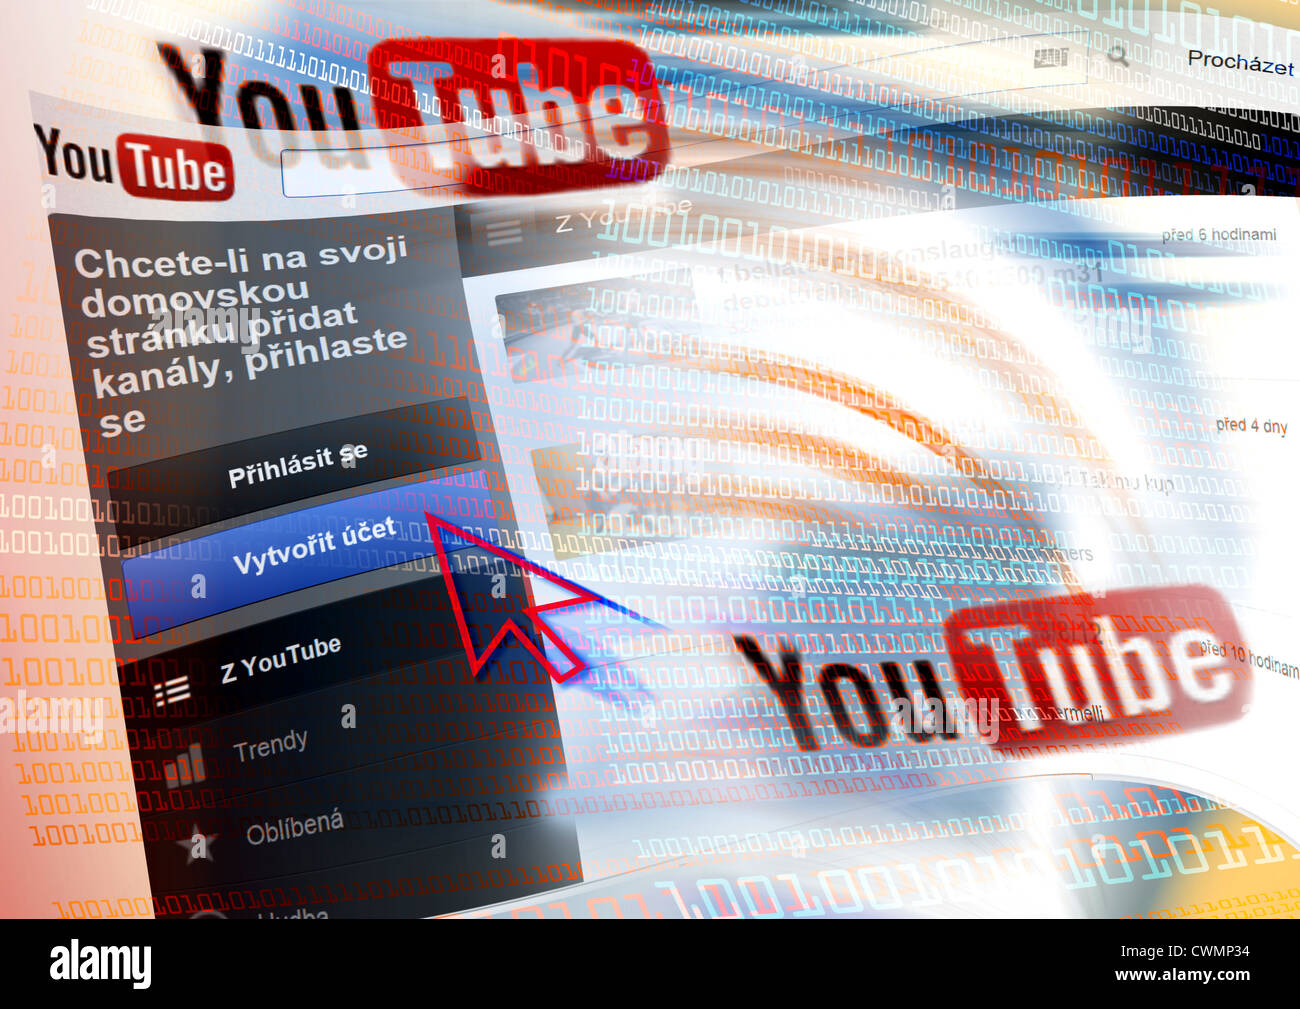 YouTube - ceska verze / You Tube screen czech version Stock Photo